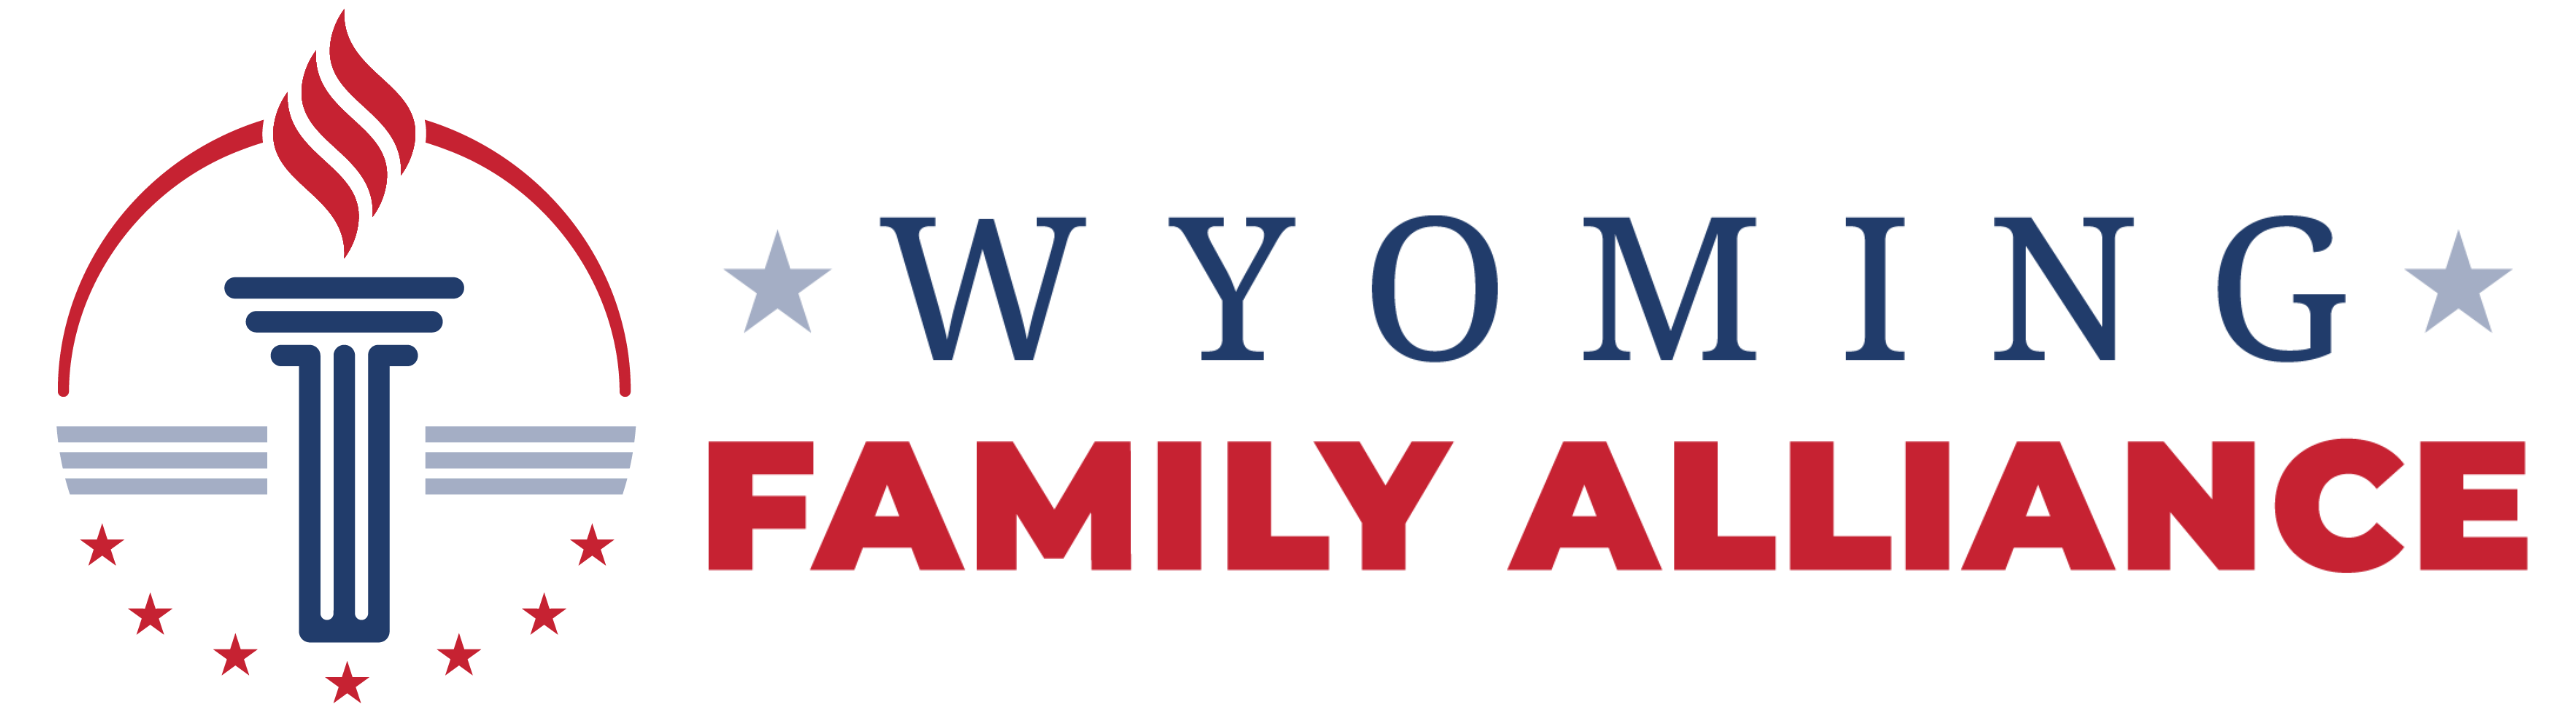 Wyoming Family Alliance